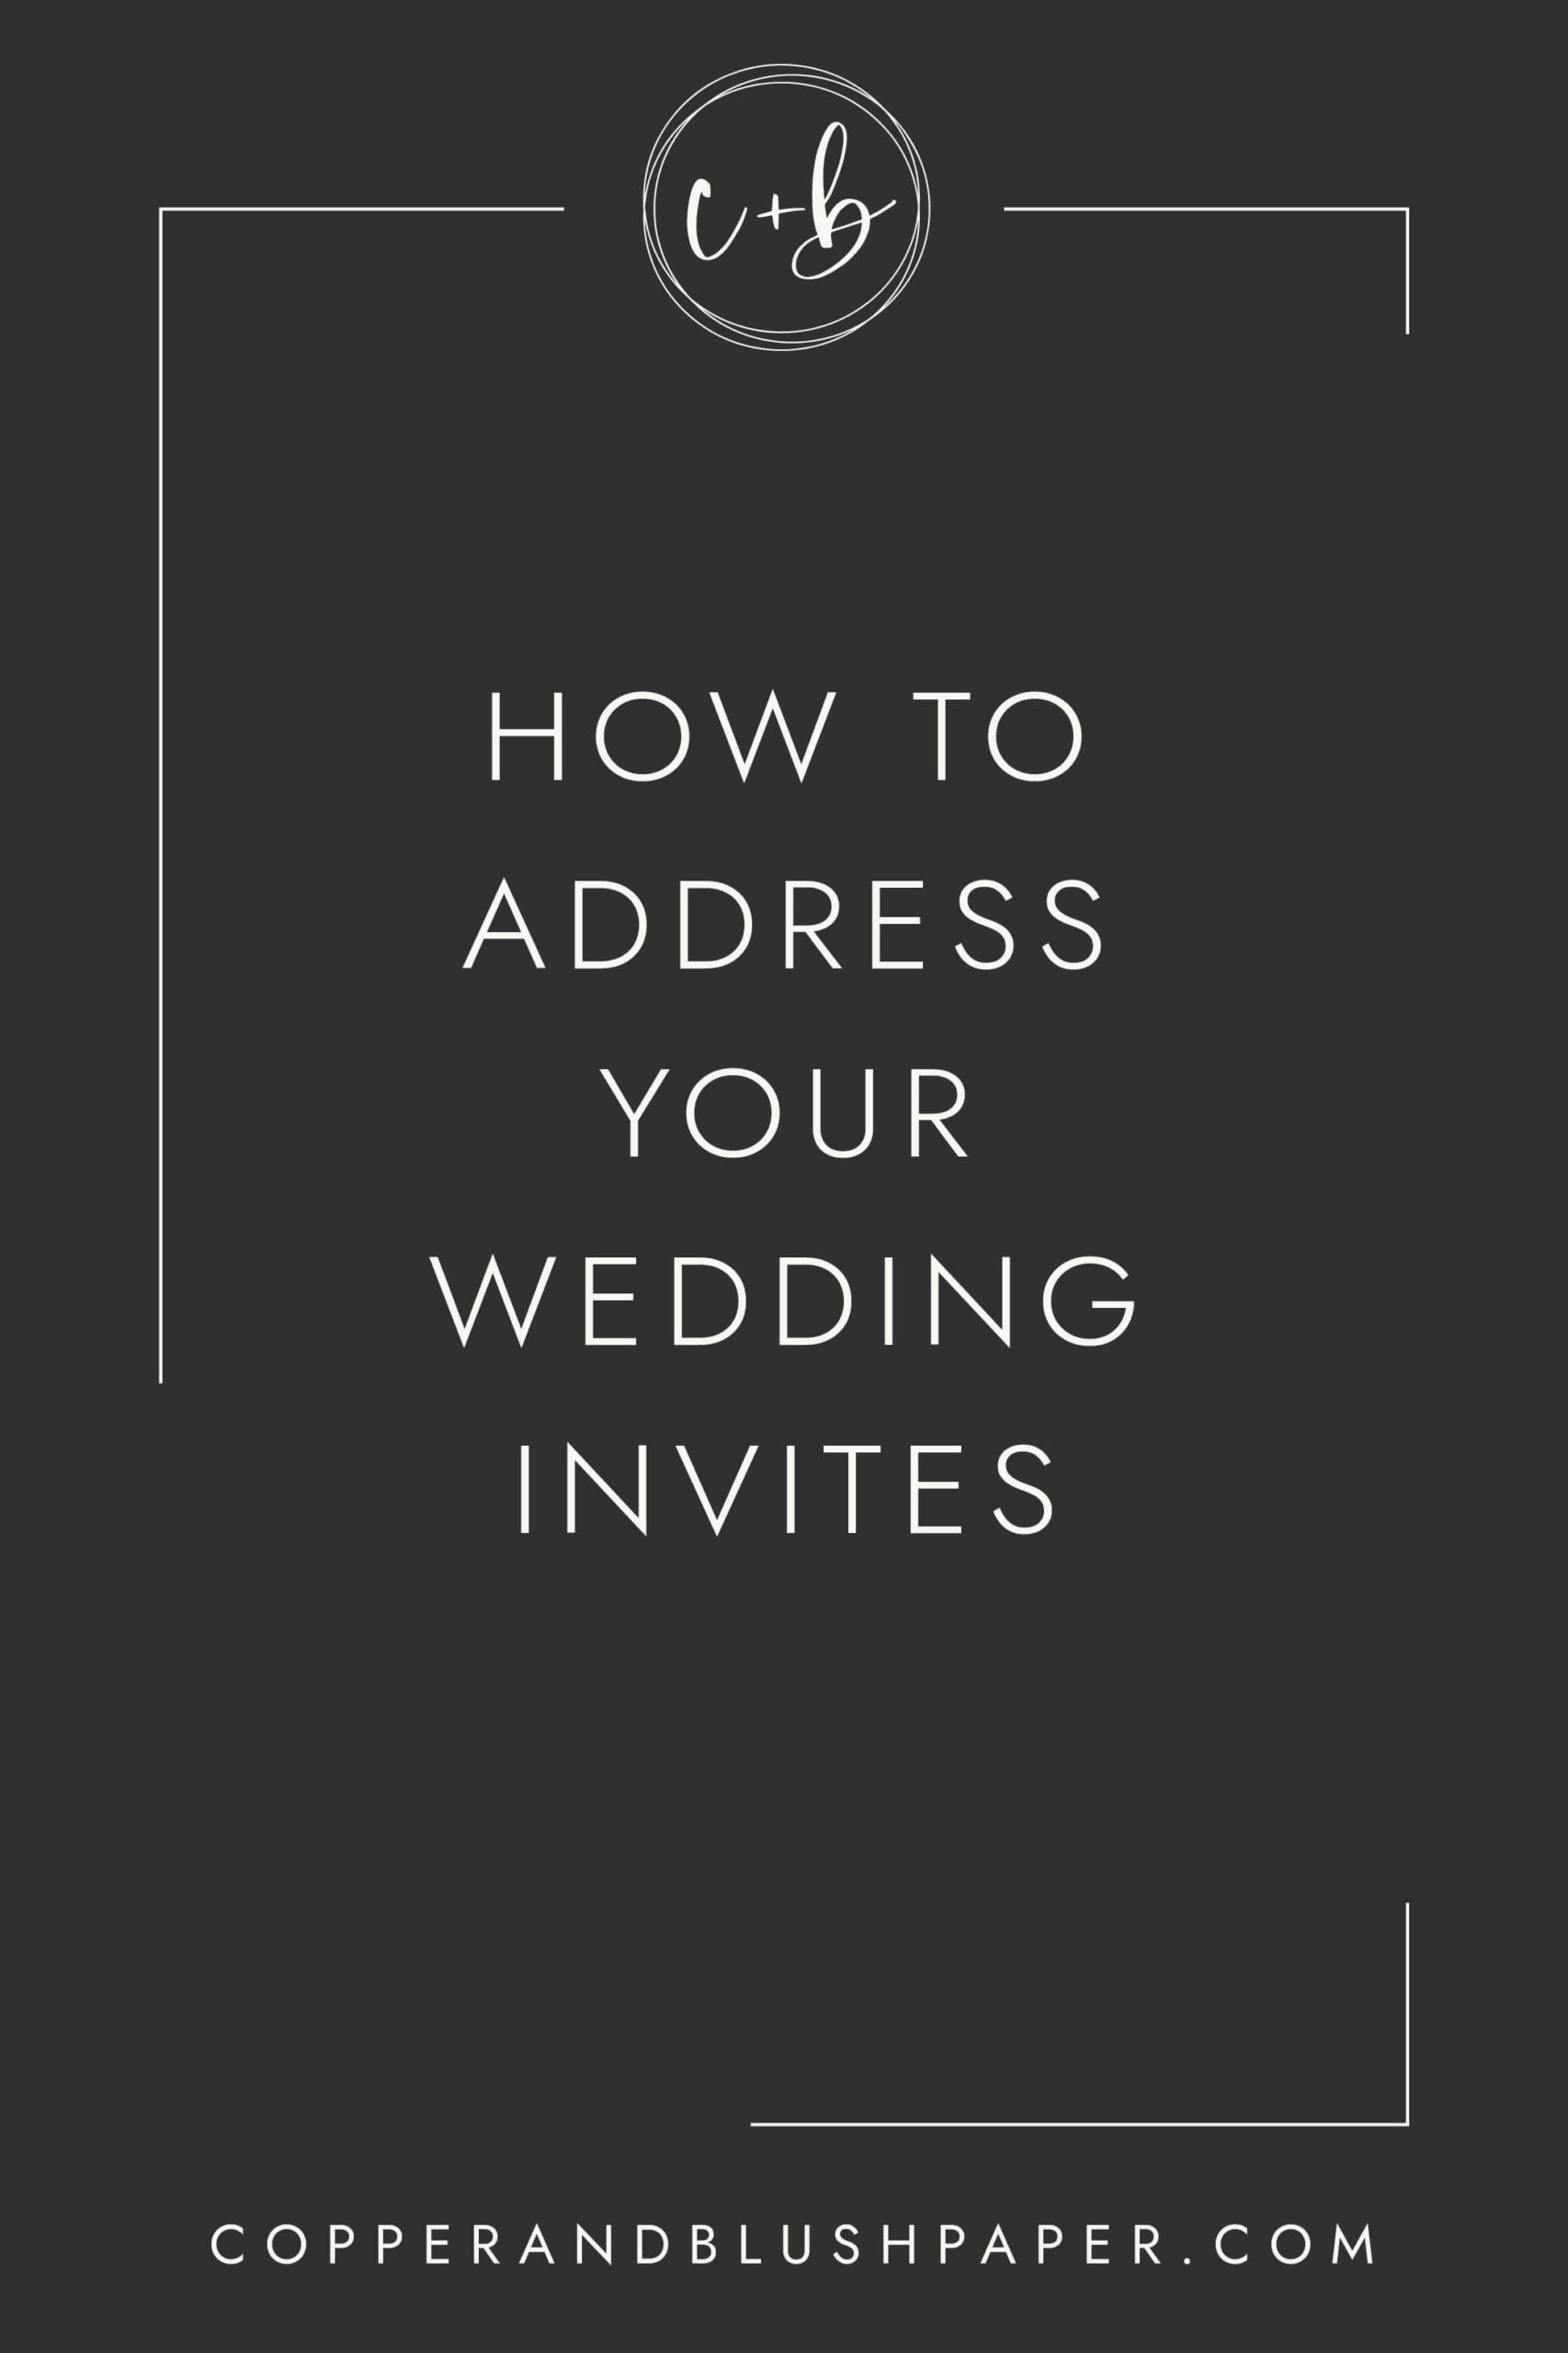 How to Address Your Wedding Invitations - copperandblushpaper.com